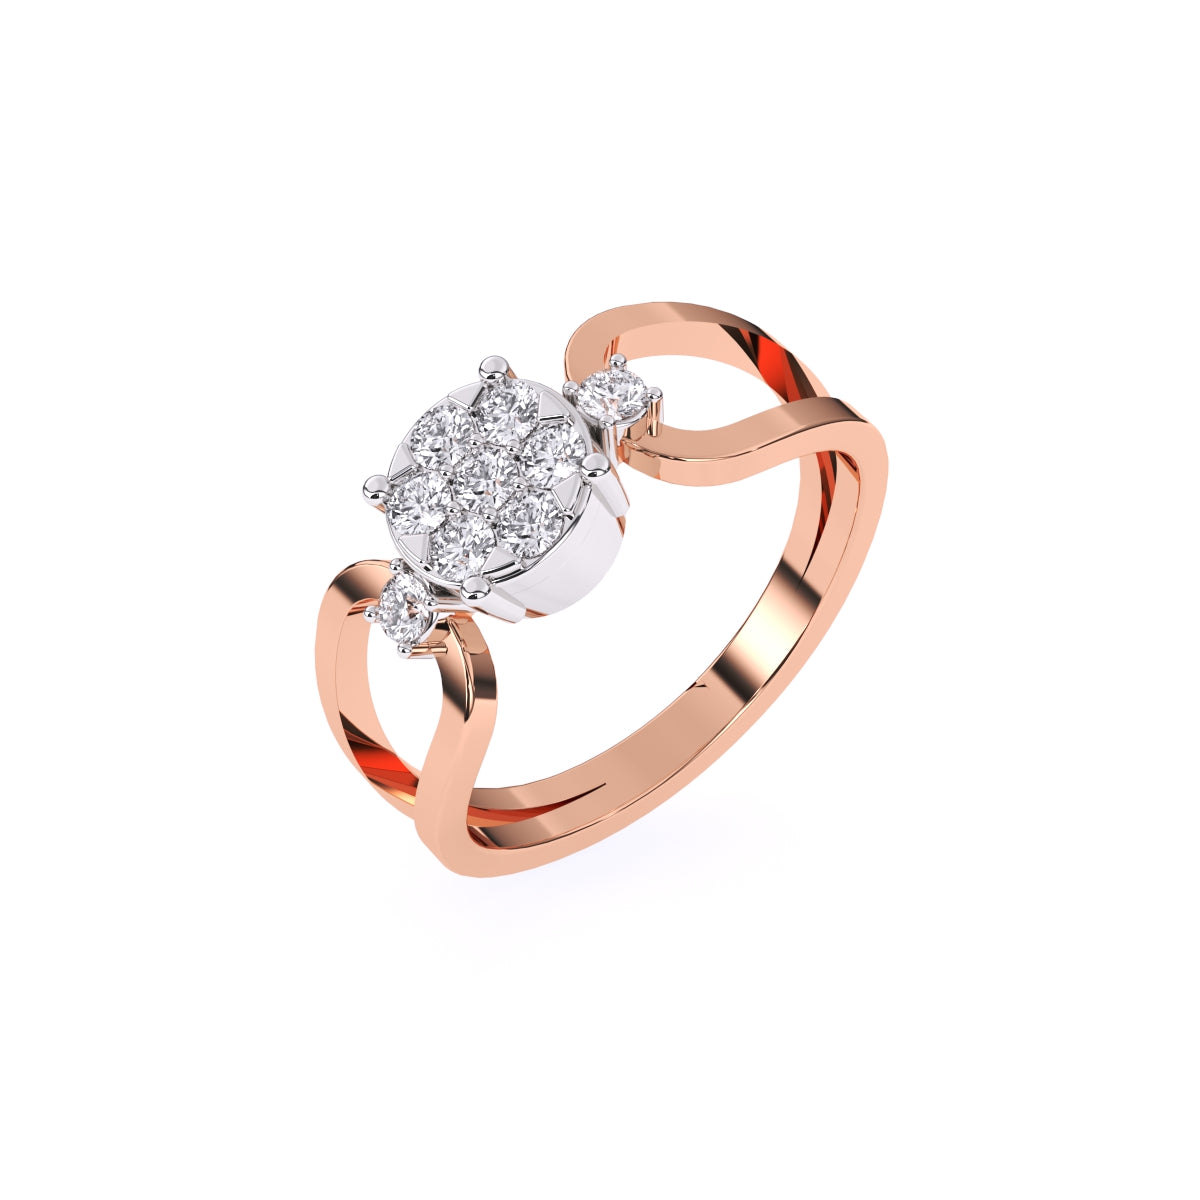 Anzura - 14k White & Rose Gold 1.5 Carat Round Halo Natural Diamond  Engagement Ring @ $4500 | Gabriel & Co.